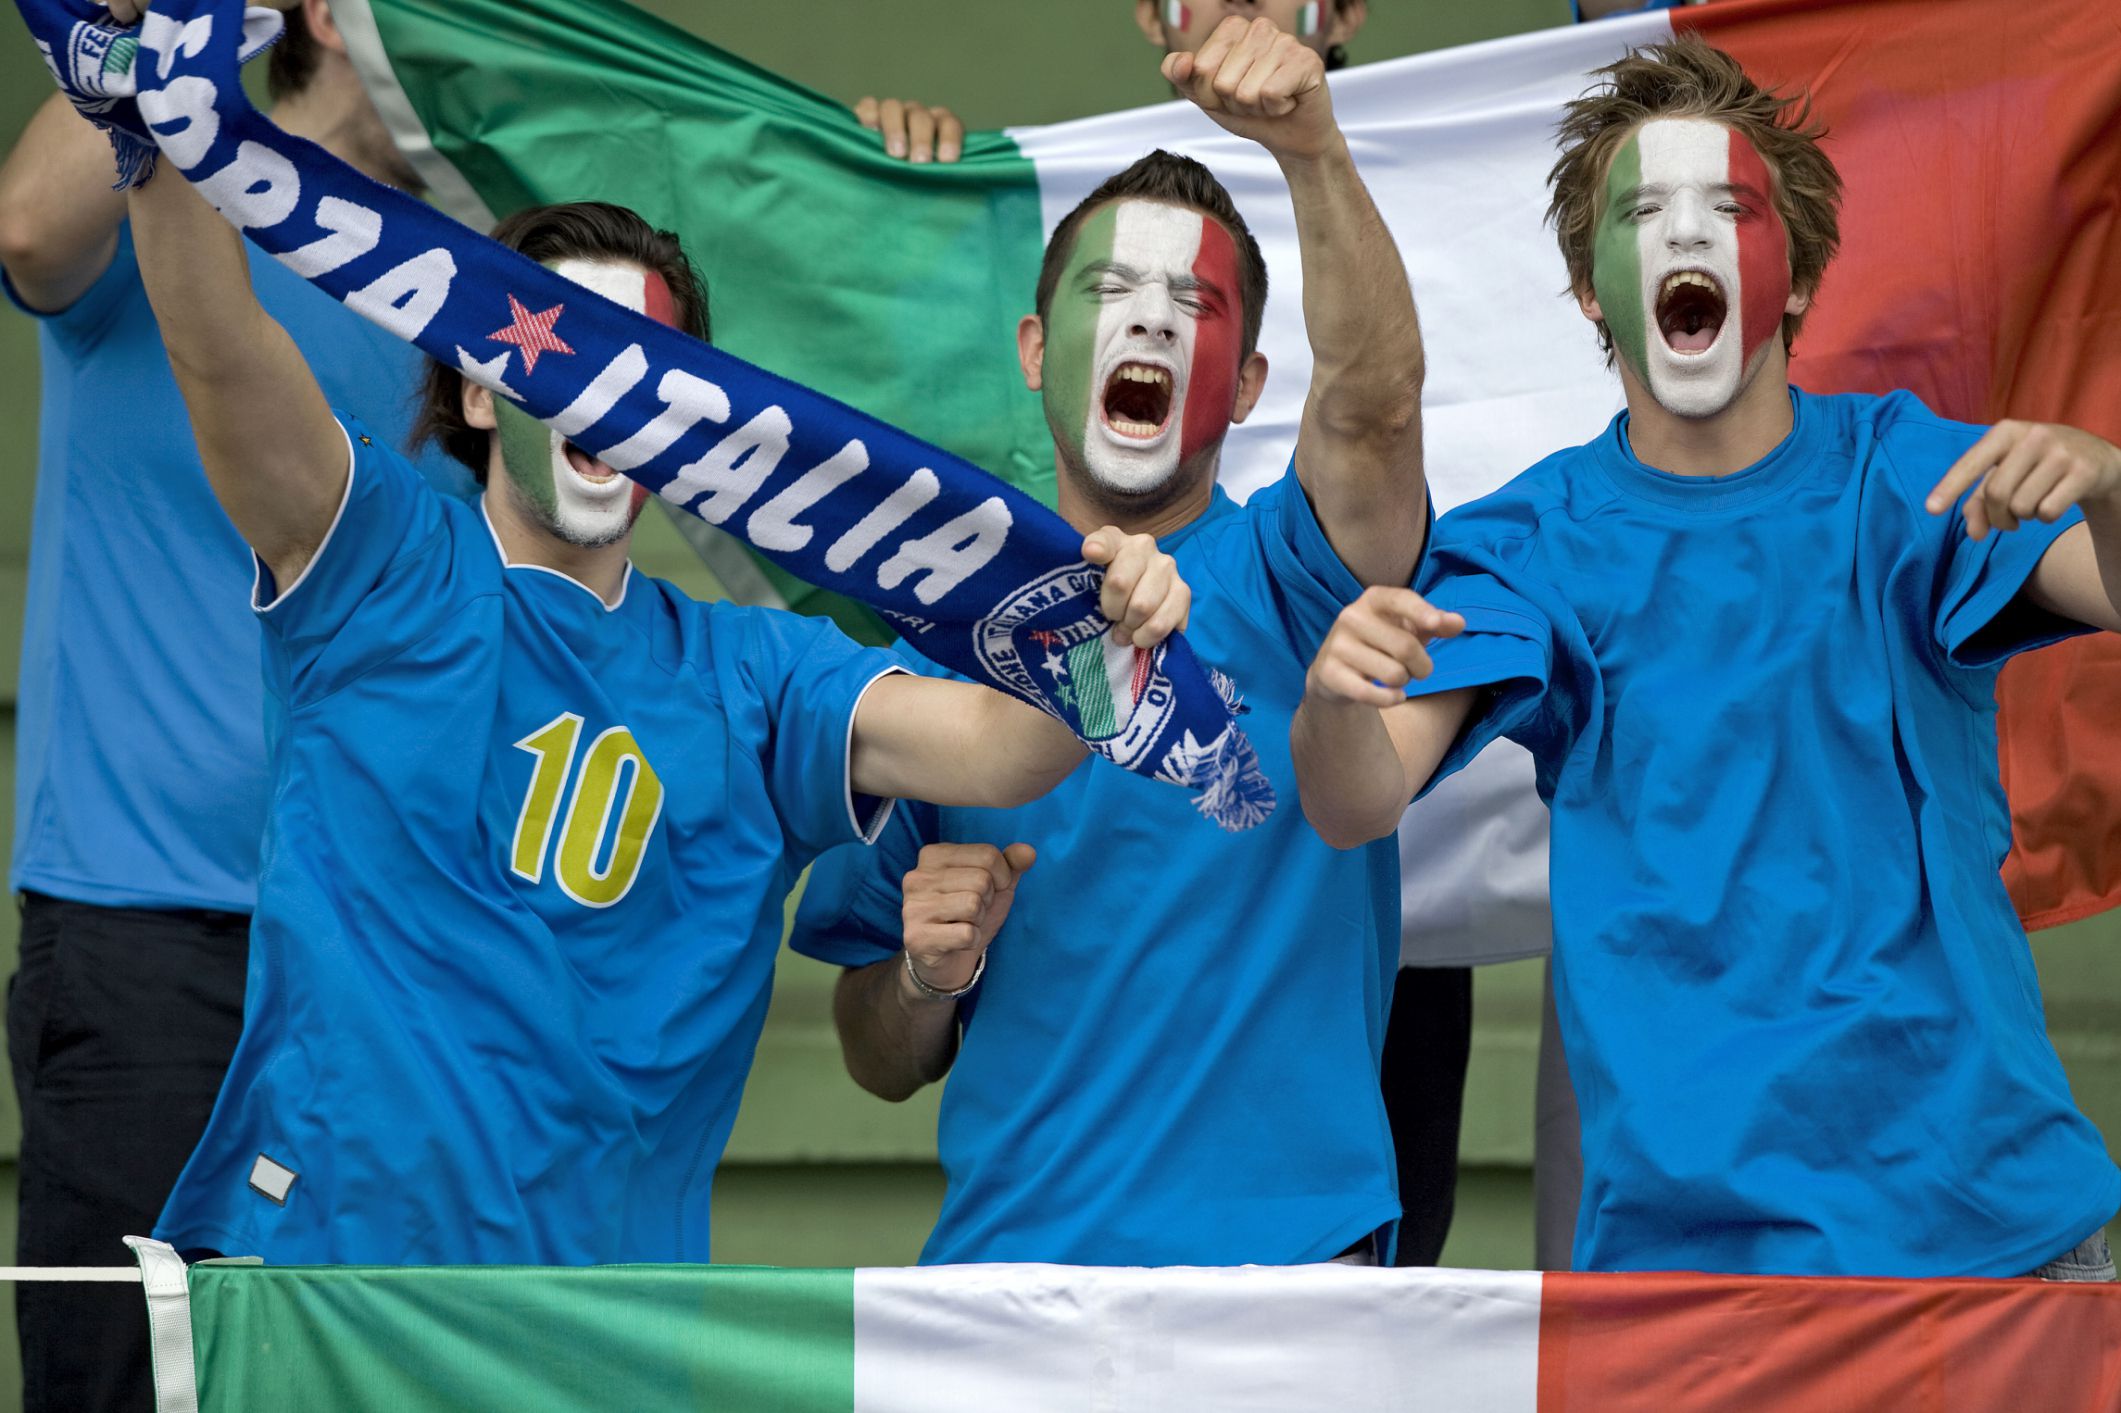 Team Italien